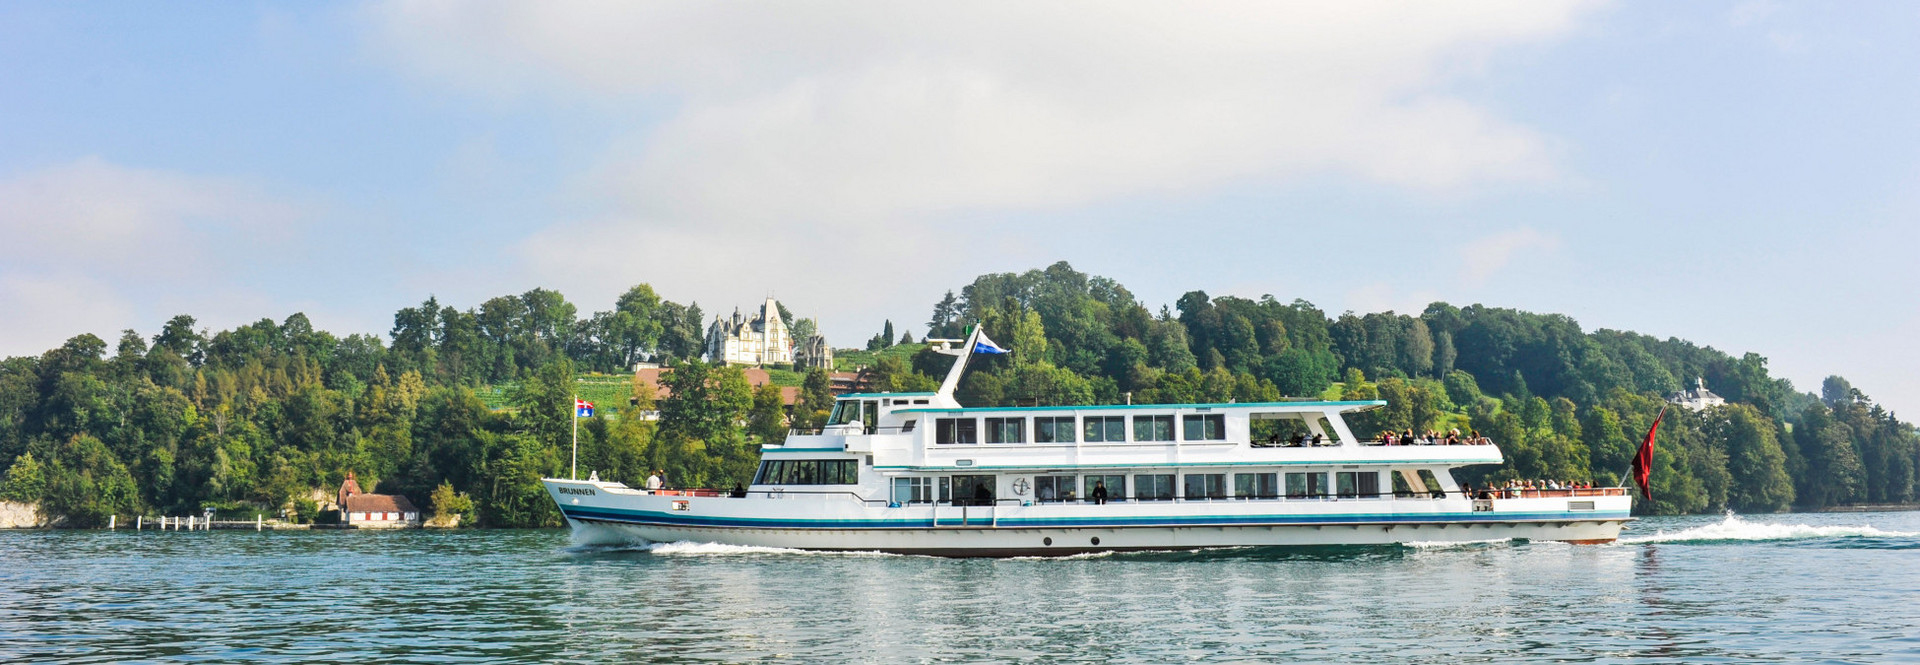 The motor vessel Brunnen sails on Lake Lucerne in sunny weather.